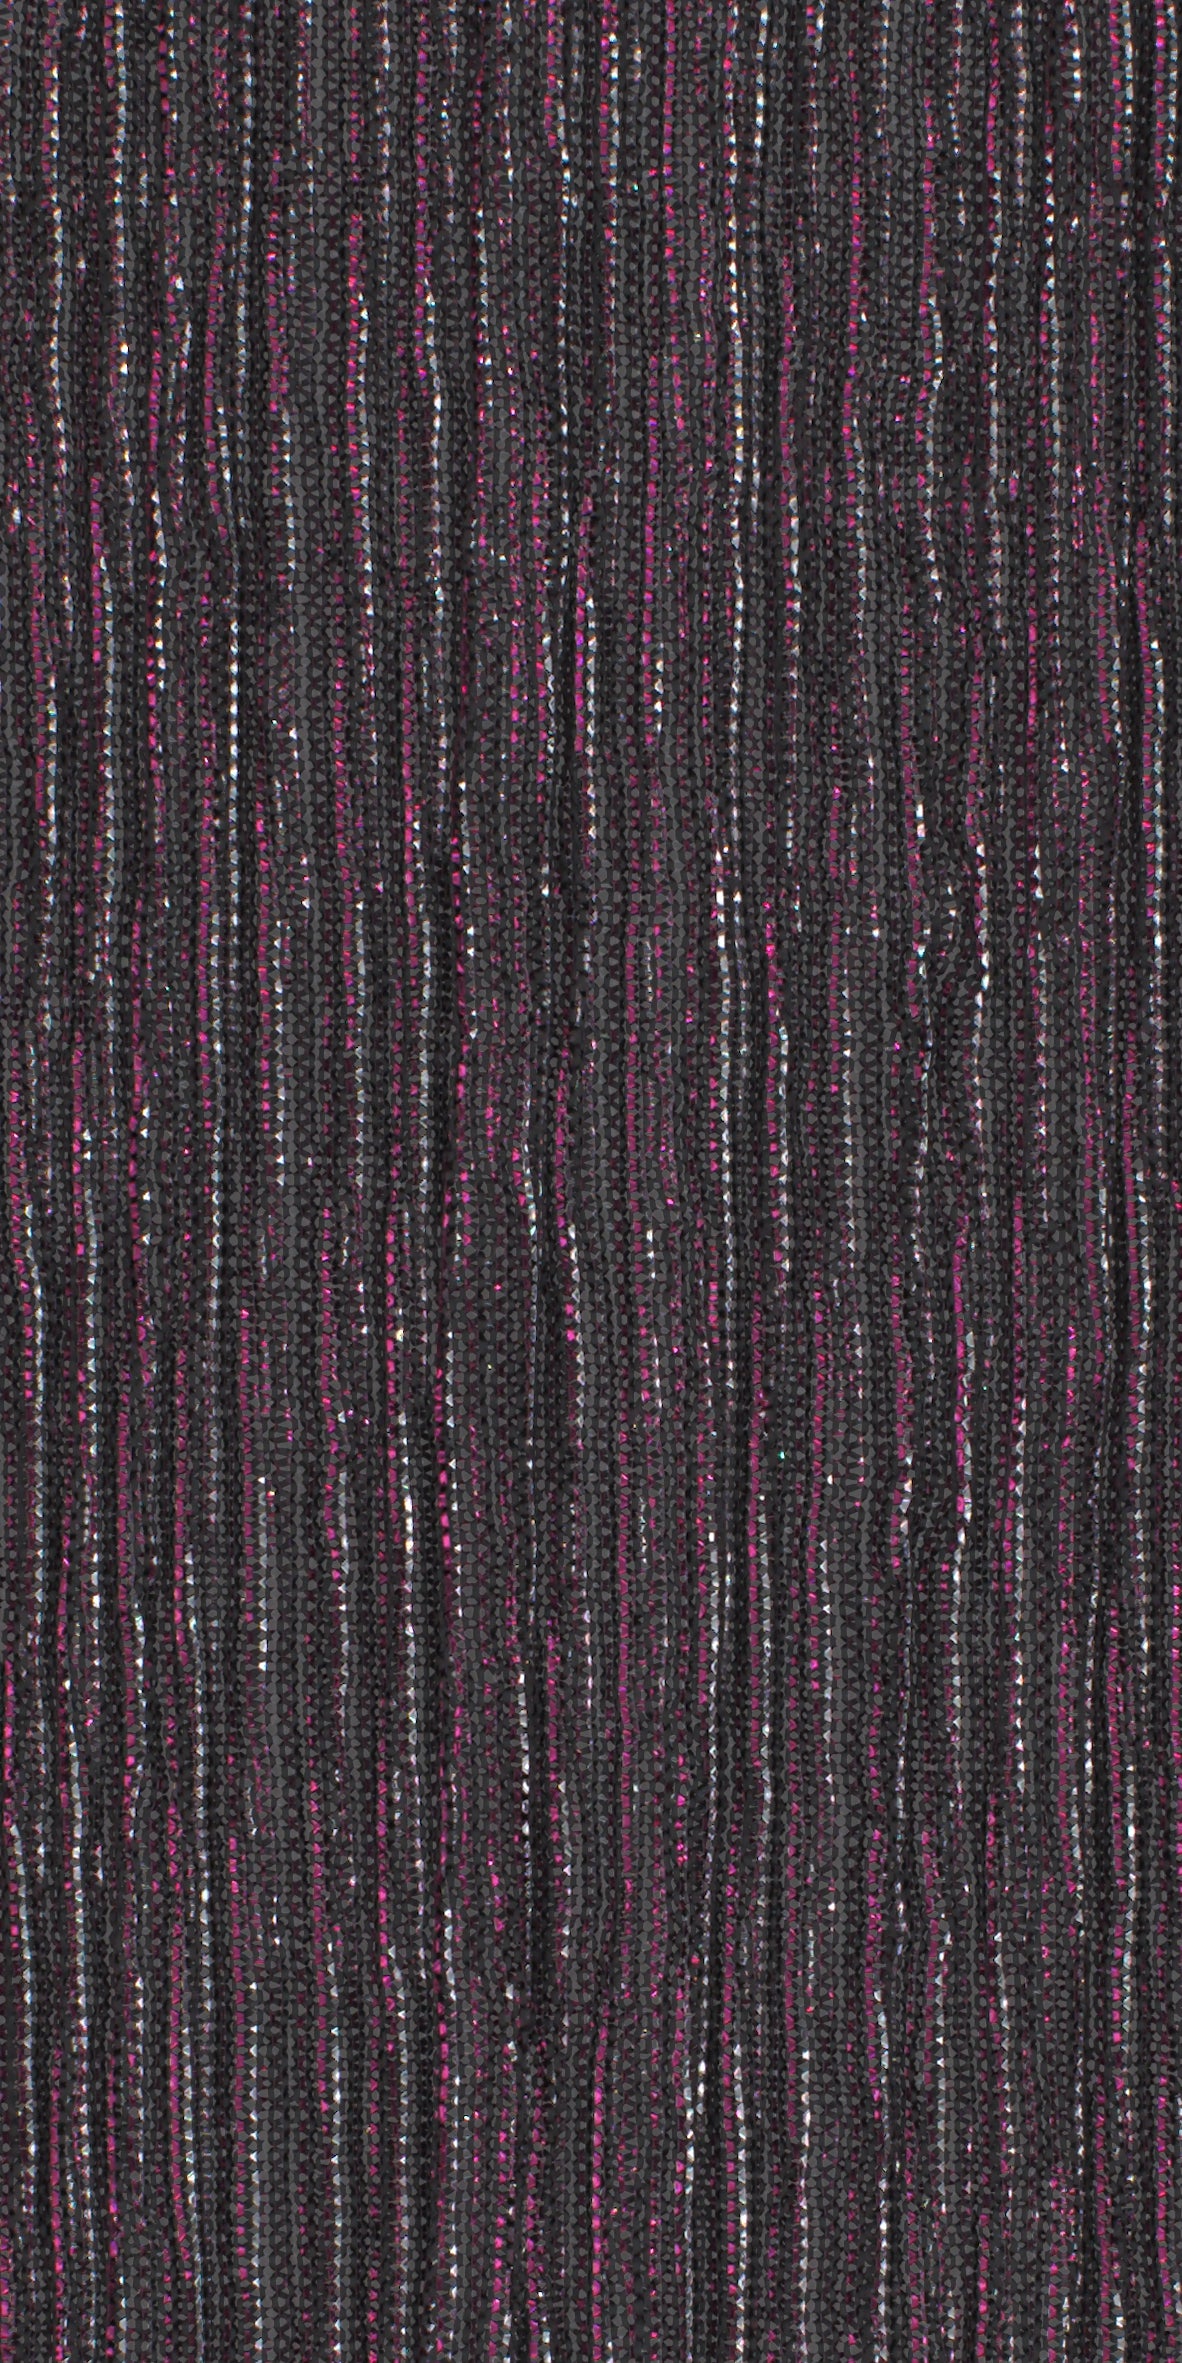 12006-06 Silver Fuchsia Metallic Pleat Plain Dyed Blend 126g/yd 56&quot; blend knit metallic pink plain dyed pleat ppl new silver Metallic, Pleat - knit fabric - woven fabric - fabric company - fabric wholesale - fabric b2b - fabric factory - high quality fabric - hong kong fabric - fabric hk - acetate fabric - cotton fabric - linen fabric - metallic fabric - nylon fabric - polyester fabric - spandex fabric - chun wing hing - cwh hk - fabric worldwide ship - 針織布 - 梳織布 - 布料公司- 布料批發 - 香港布料 - 秦榮興